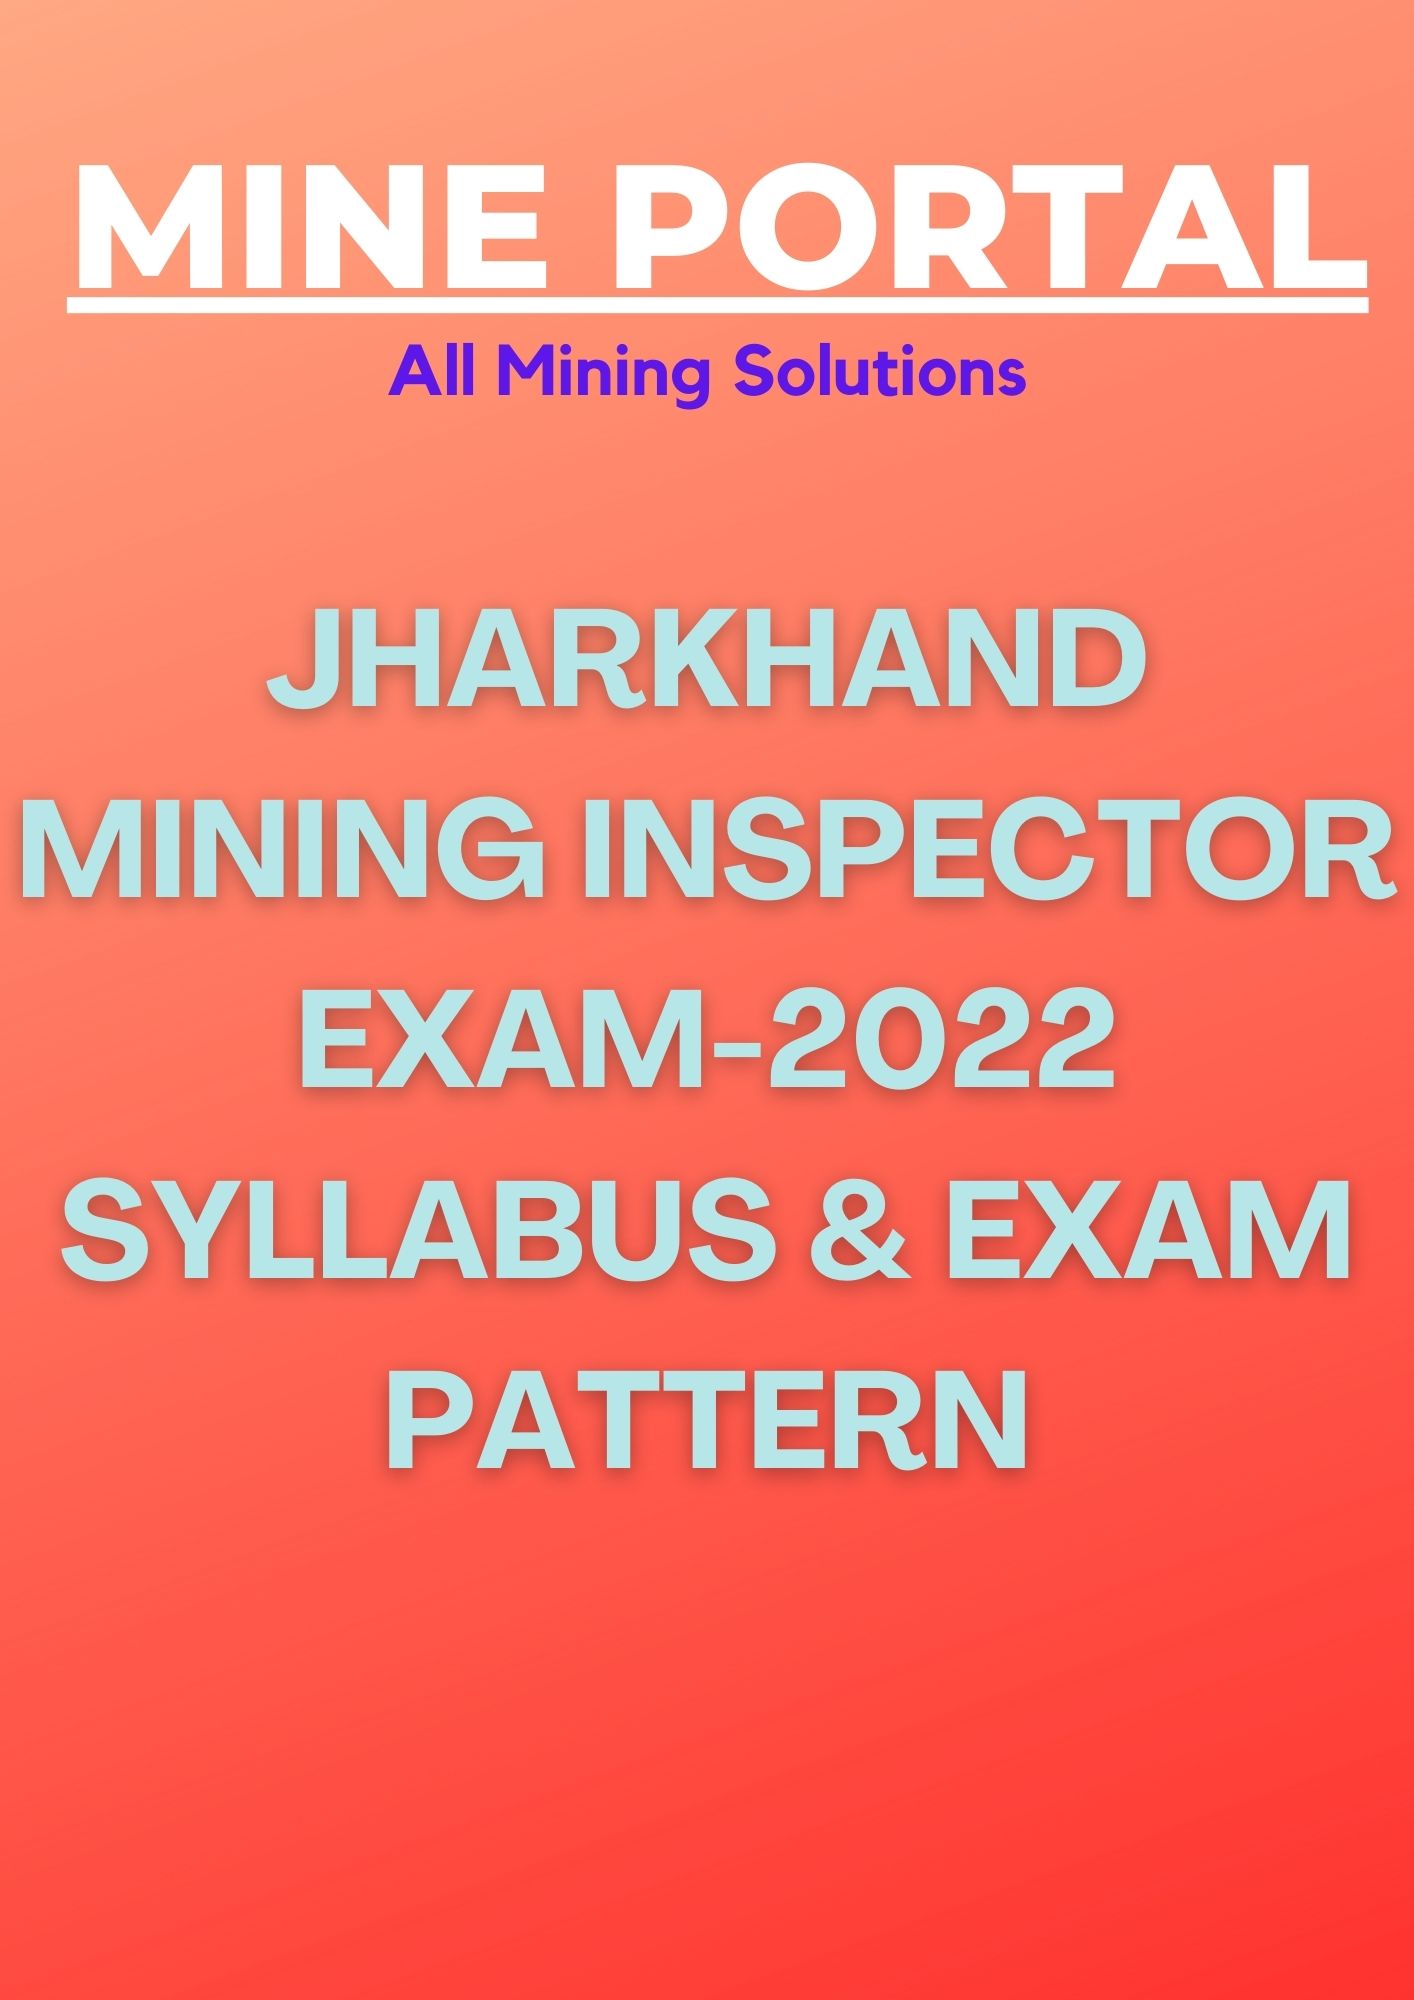 JHARKHAND MINING INSPECTOR EXAM-2023 SYLLABUS & PATTERN